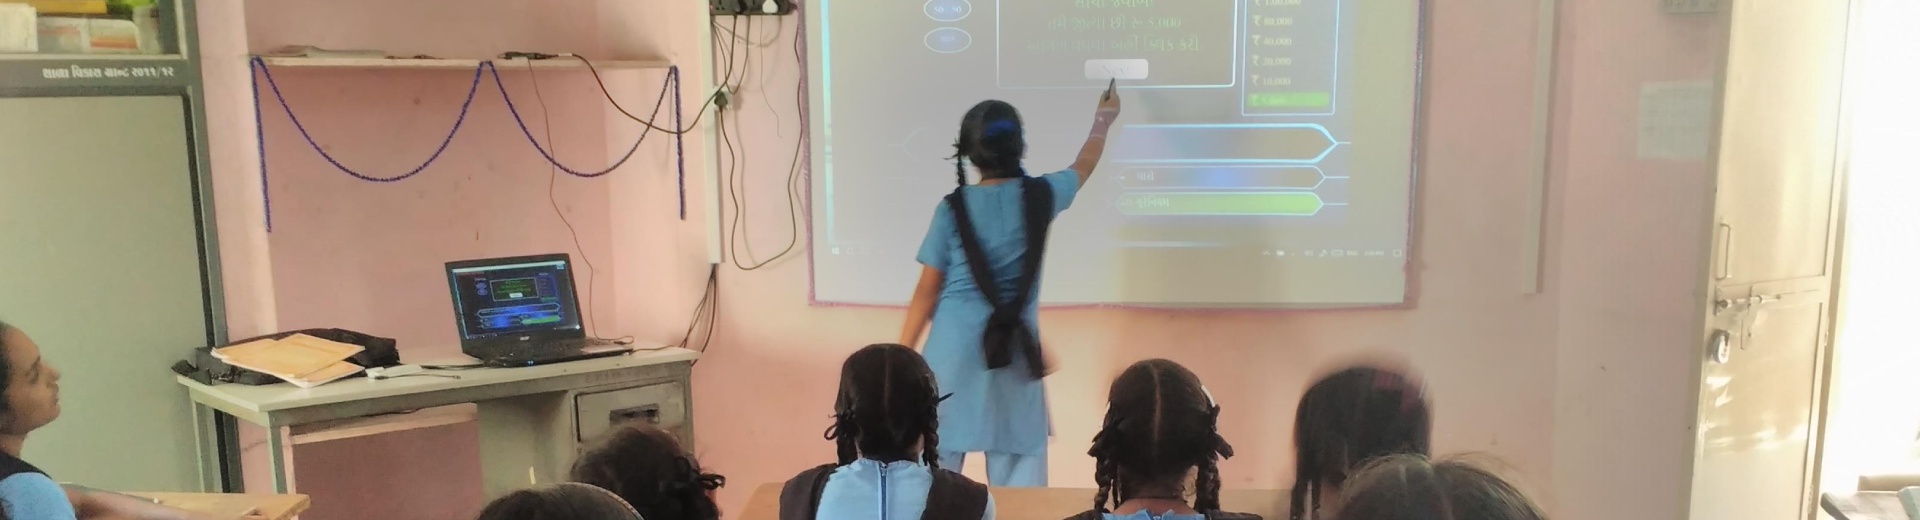 INDIA: MODERNIZING EDUCATION SYSTEMS IN GUJARAT